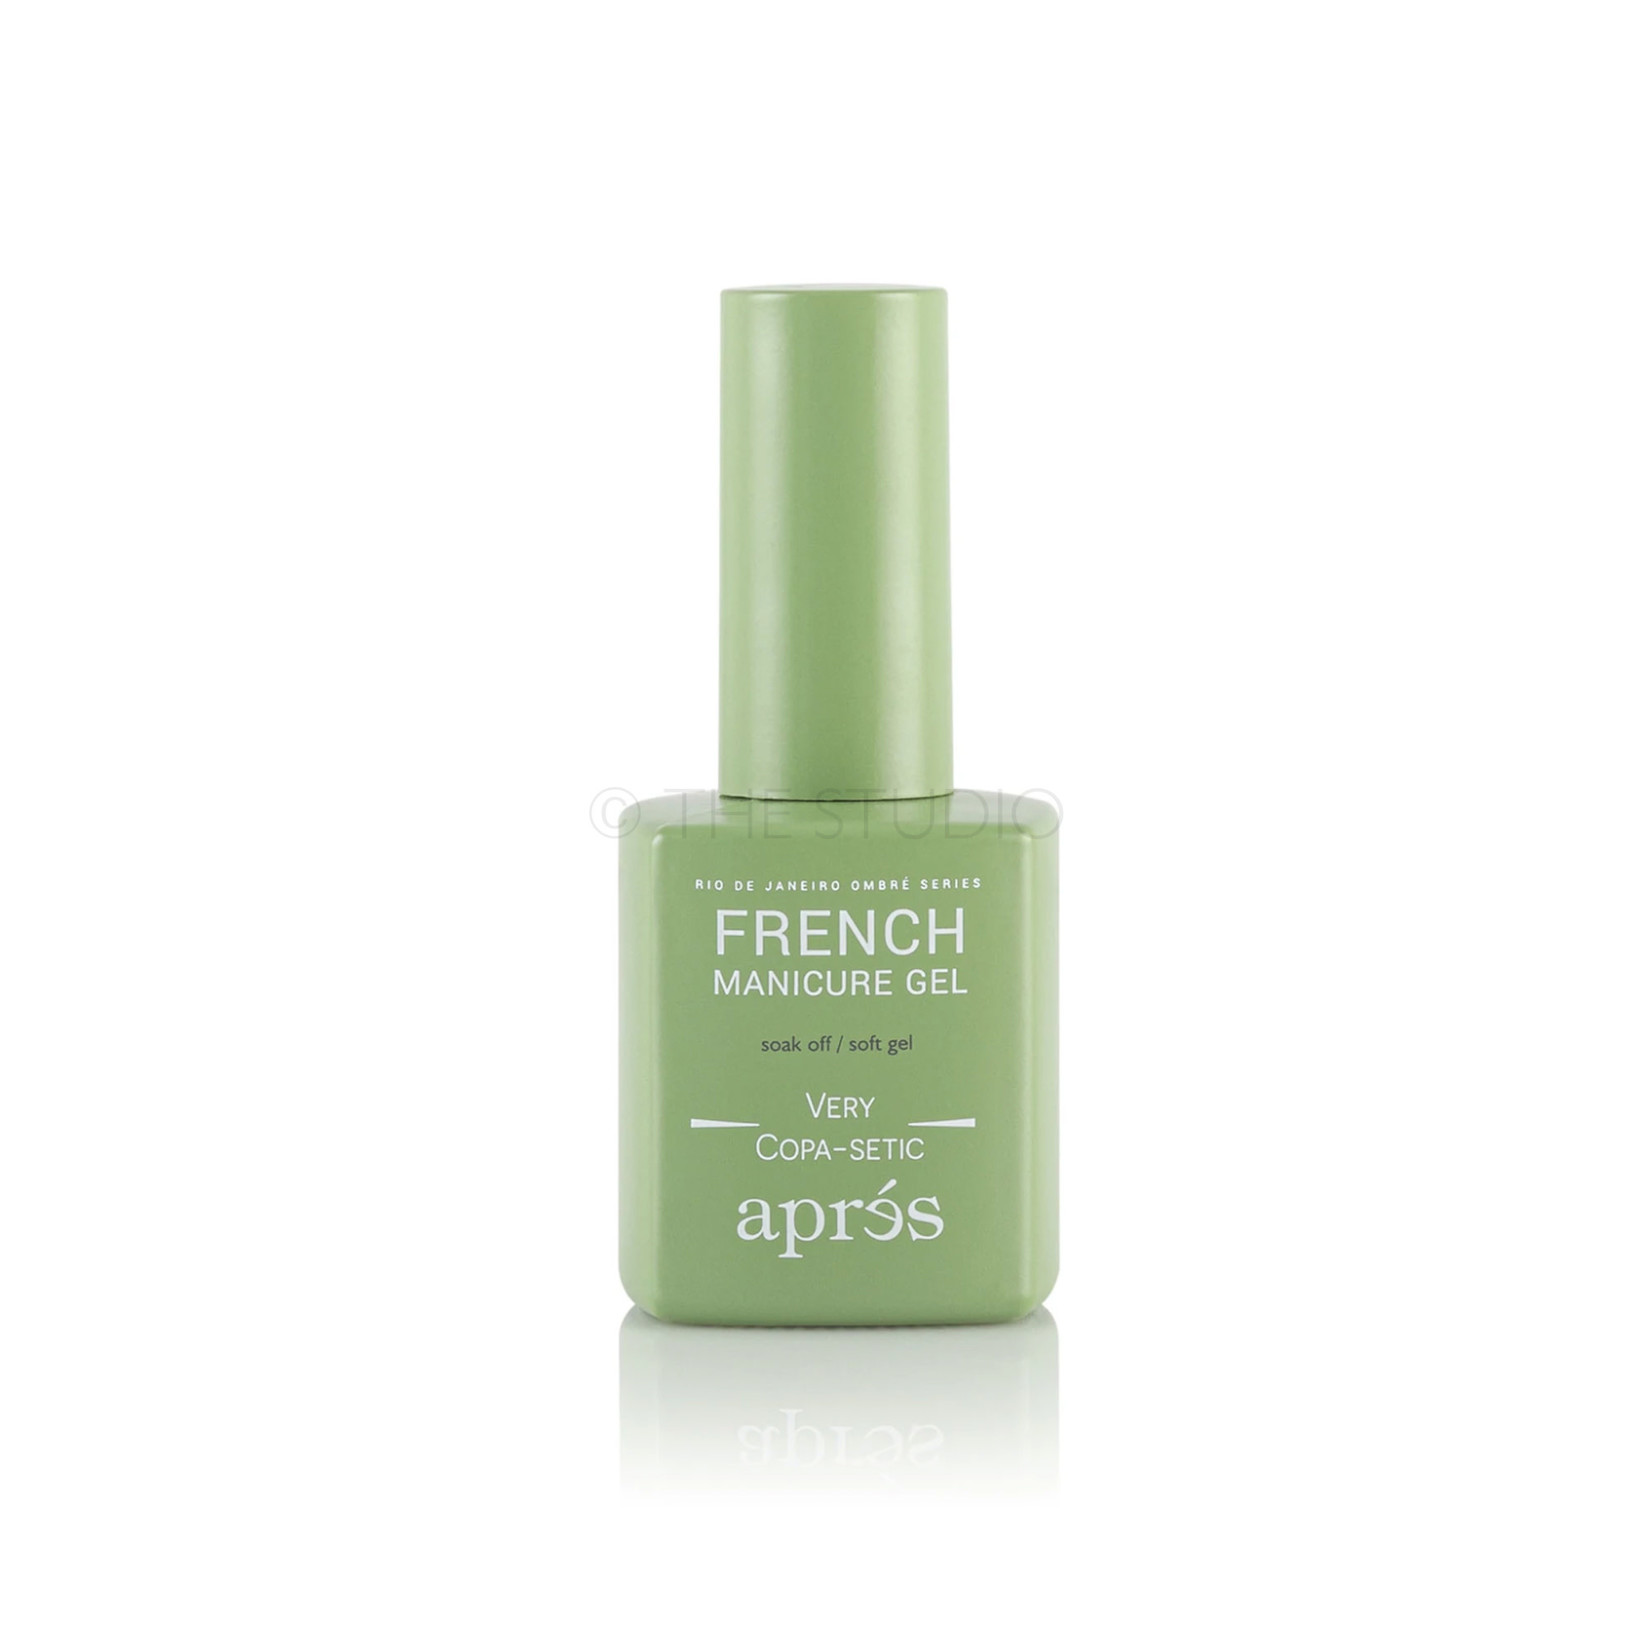 Apres Apres - French Manicure Gel - 124 Very Copa-setic - 0.5 oz